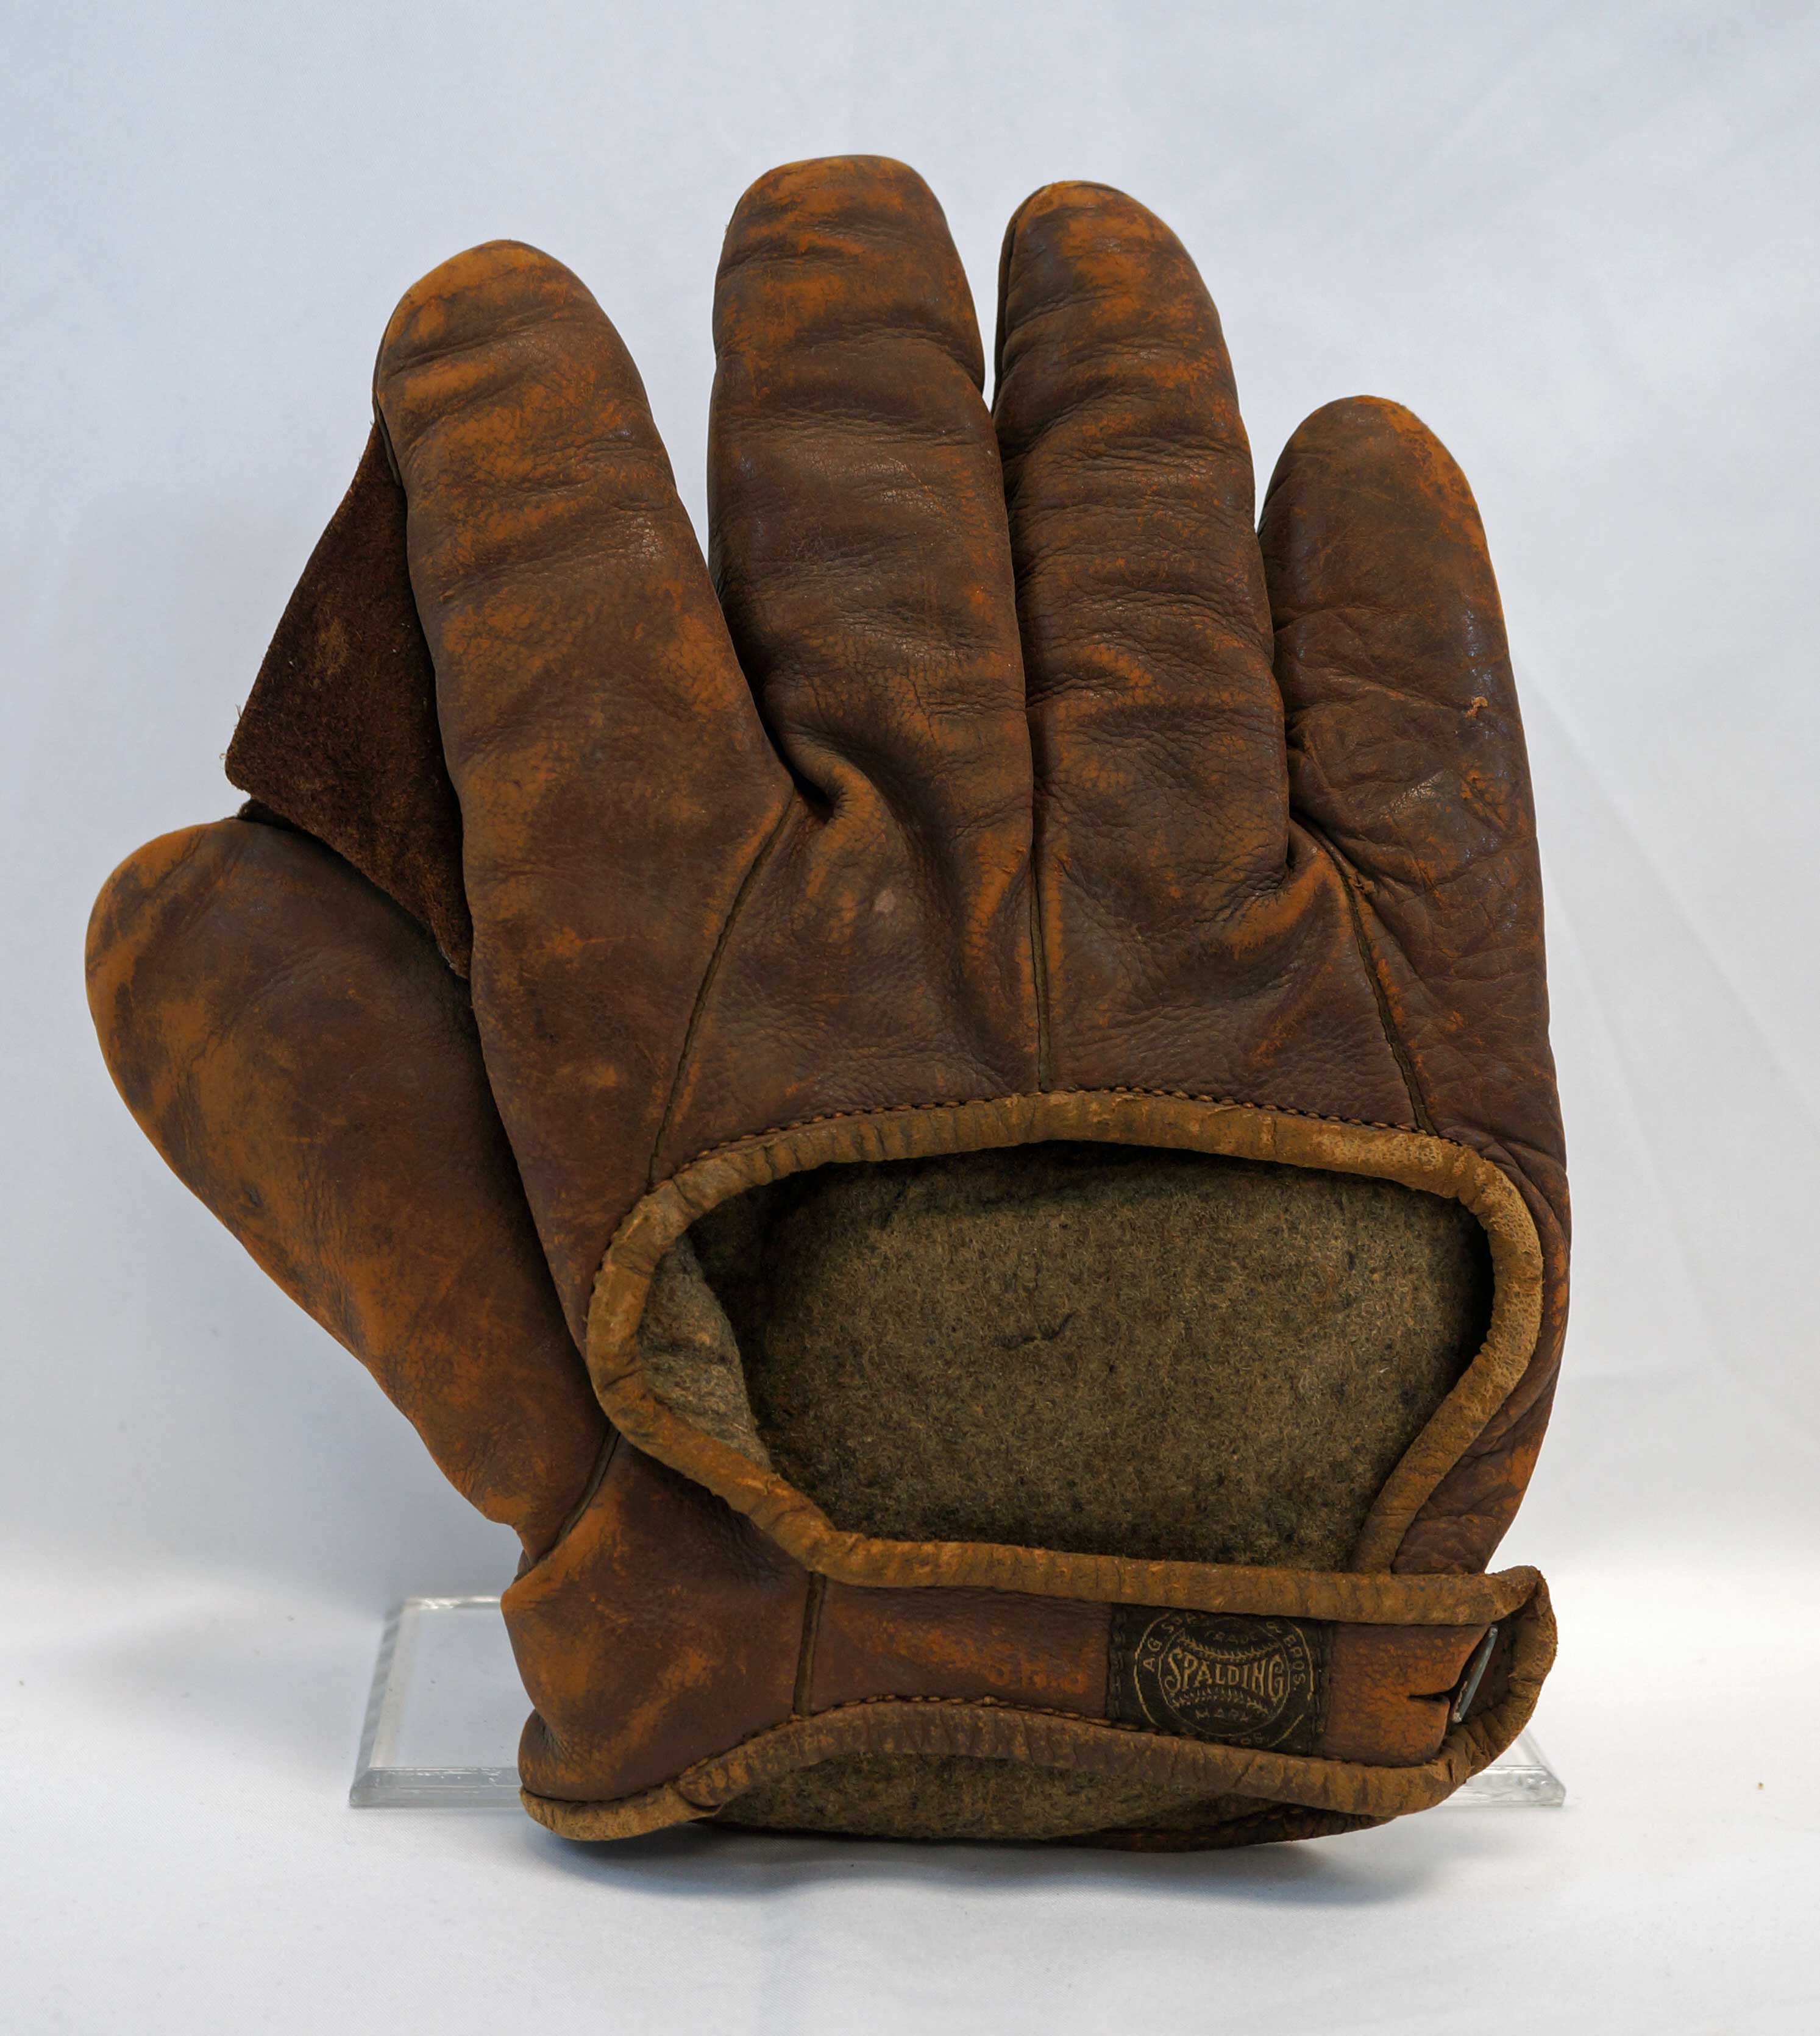 Lot 314 Ca1890 to 1910 Spalding Crescent Pad Baseball Glove